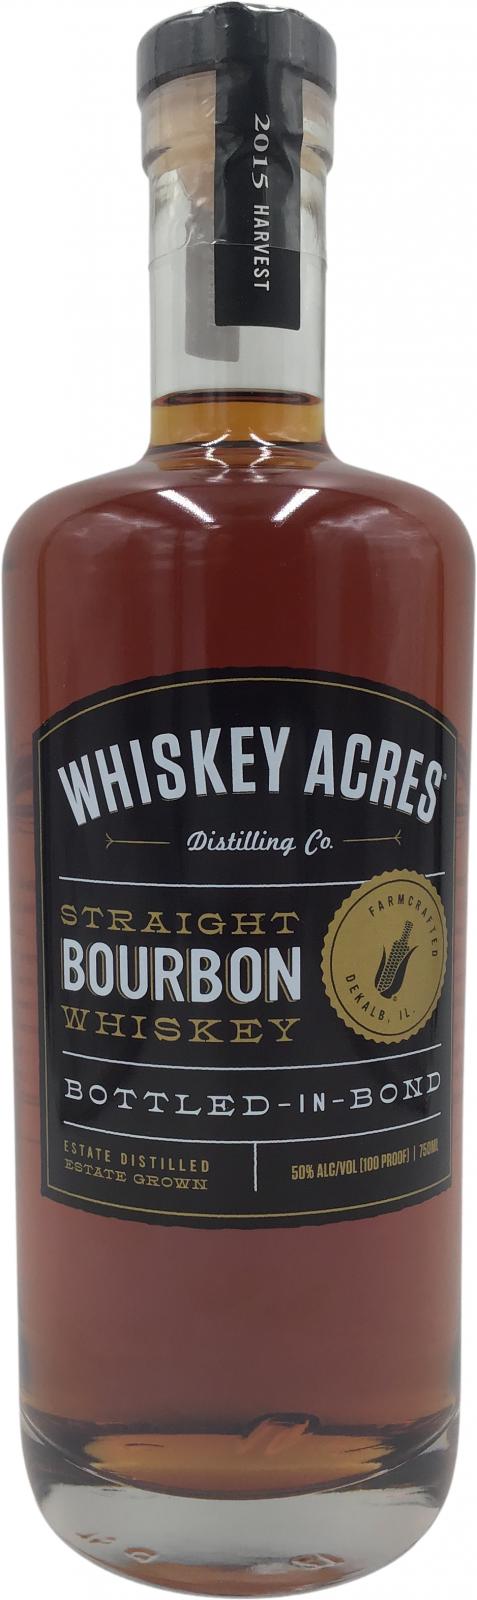 Whisky Acres Distilling Co. Straight Bourbon Whisky New Charred Oak 50% 750ml